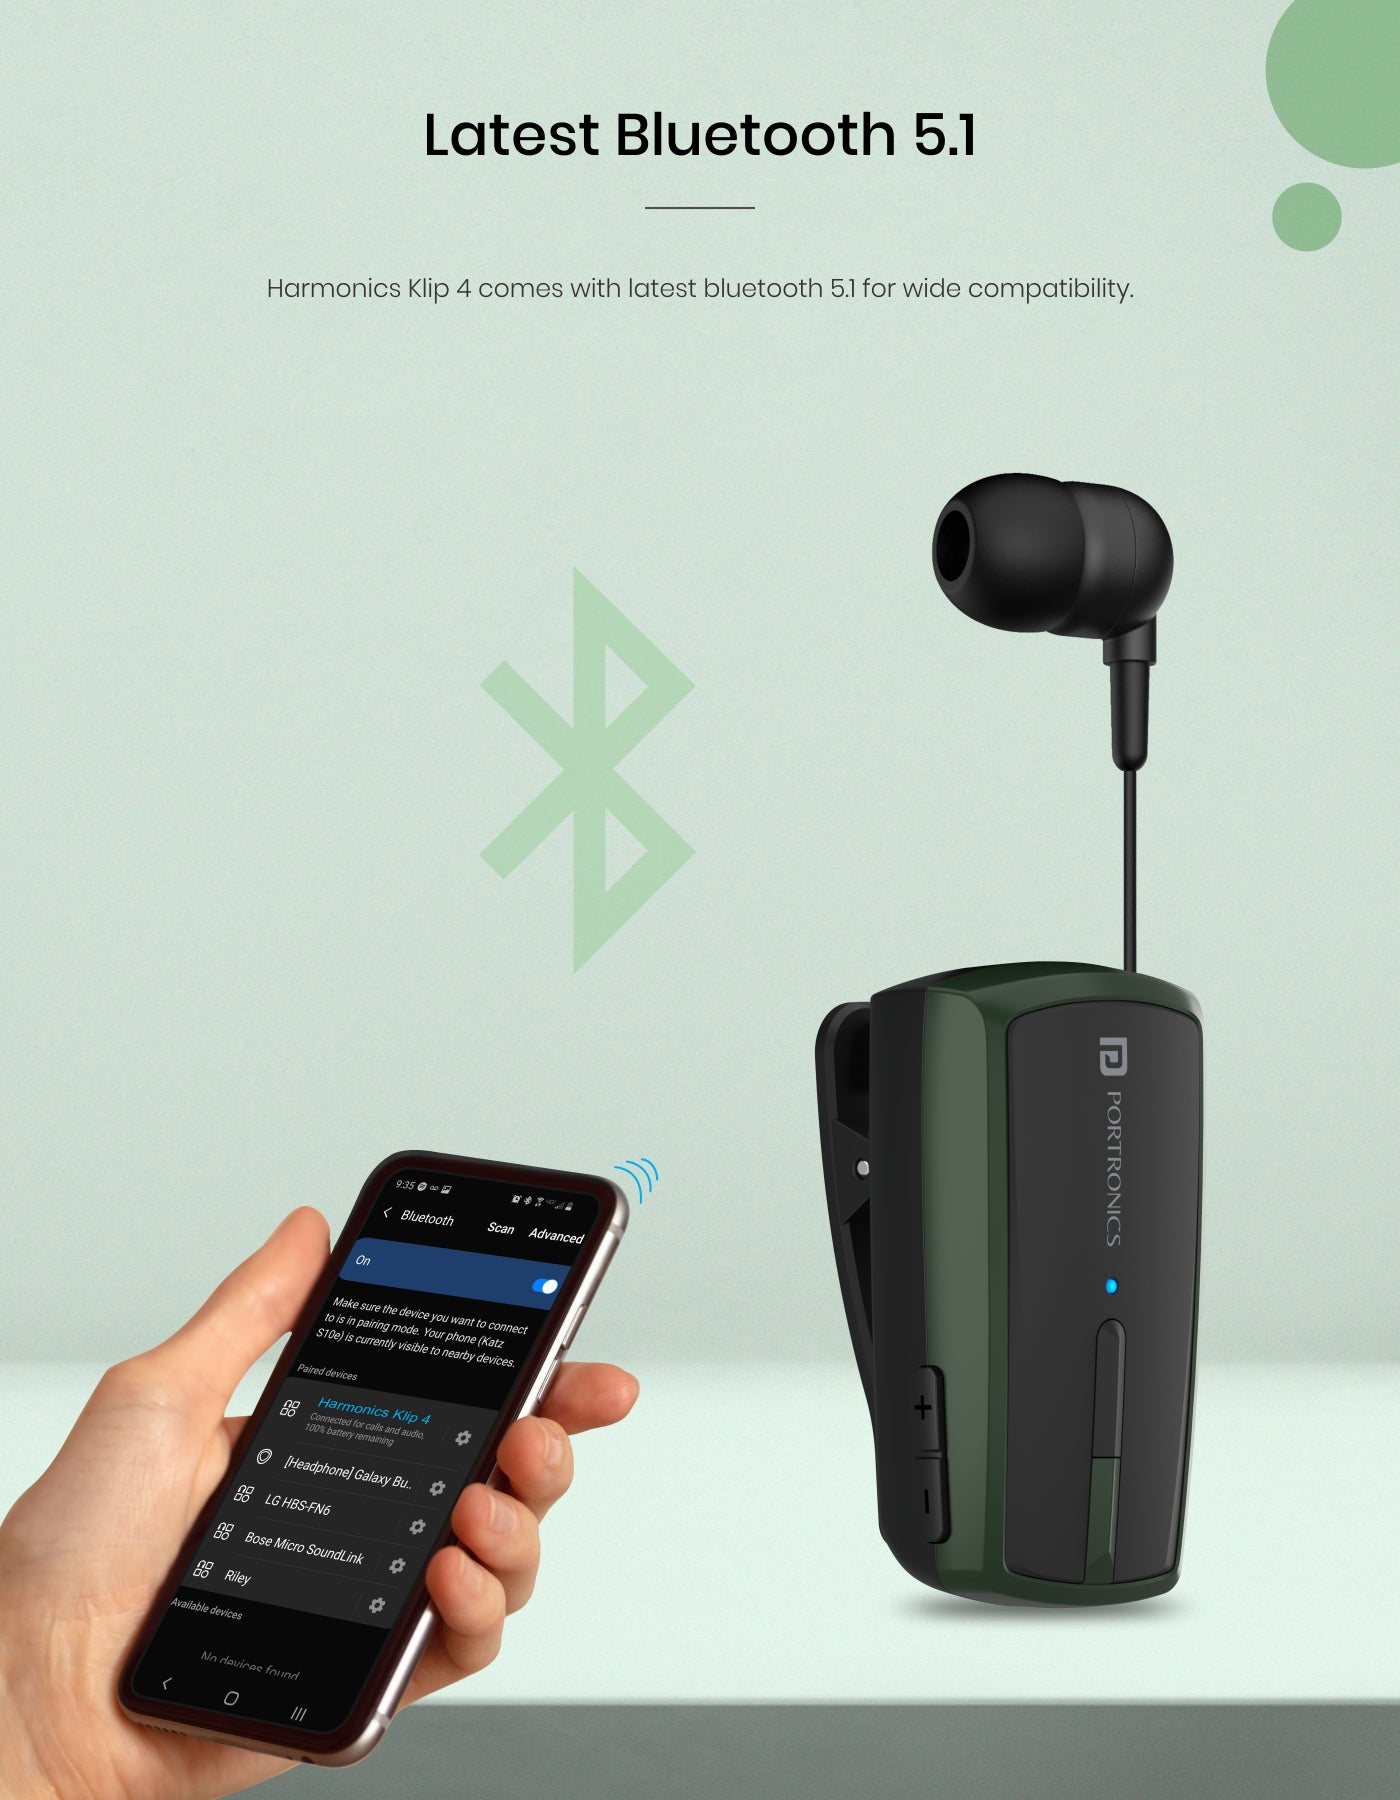 Portronics Harmonics Klip4 wireless bluetooth headset with latest bluetooth